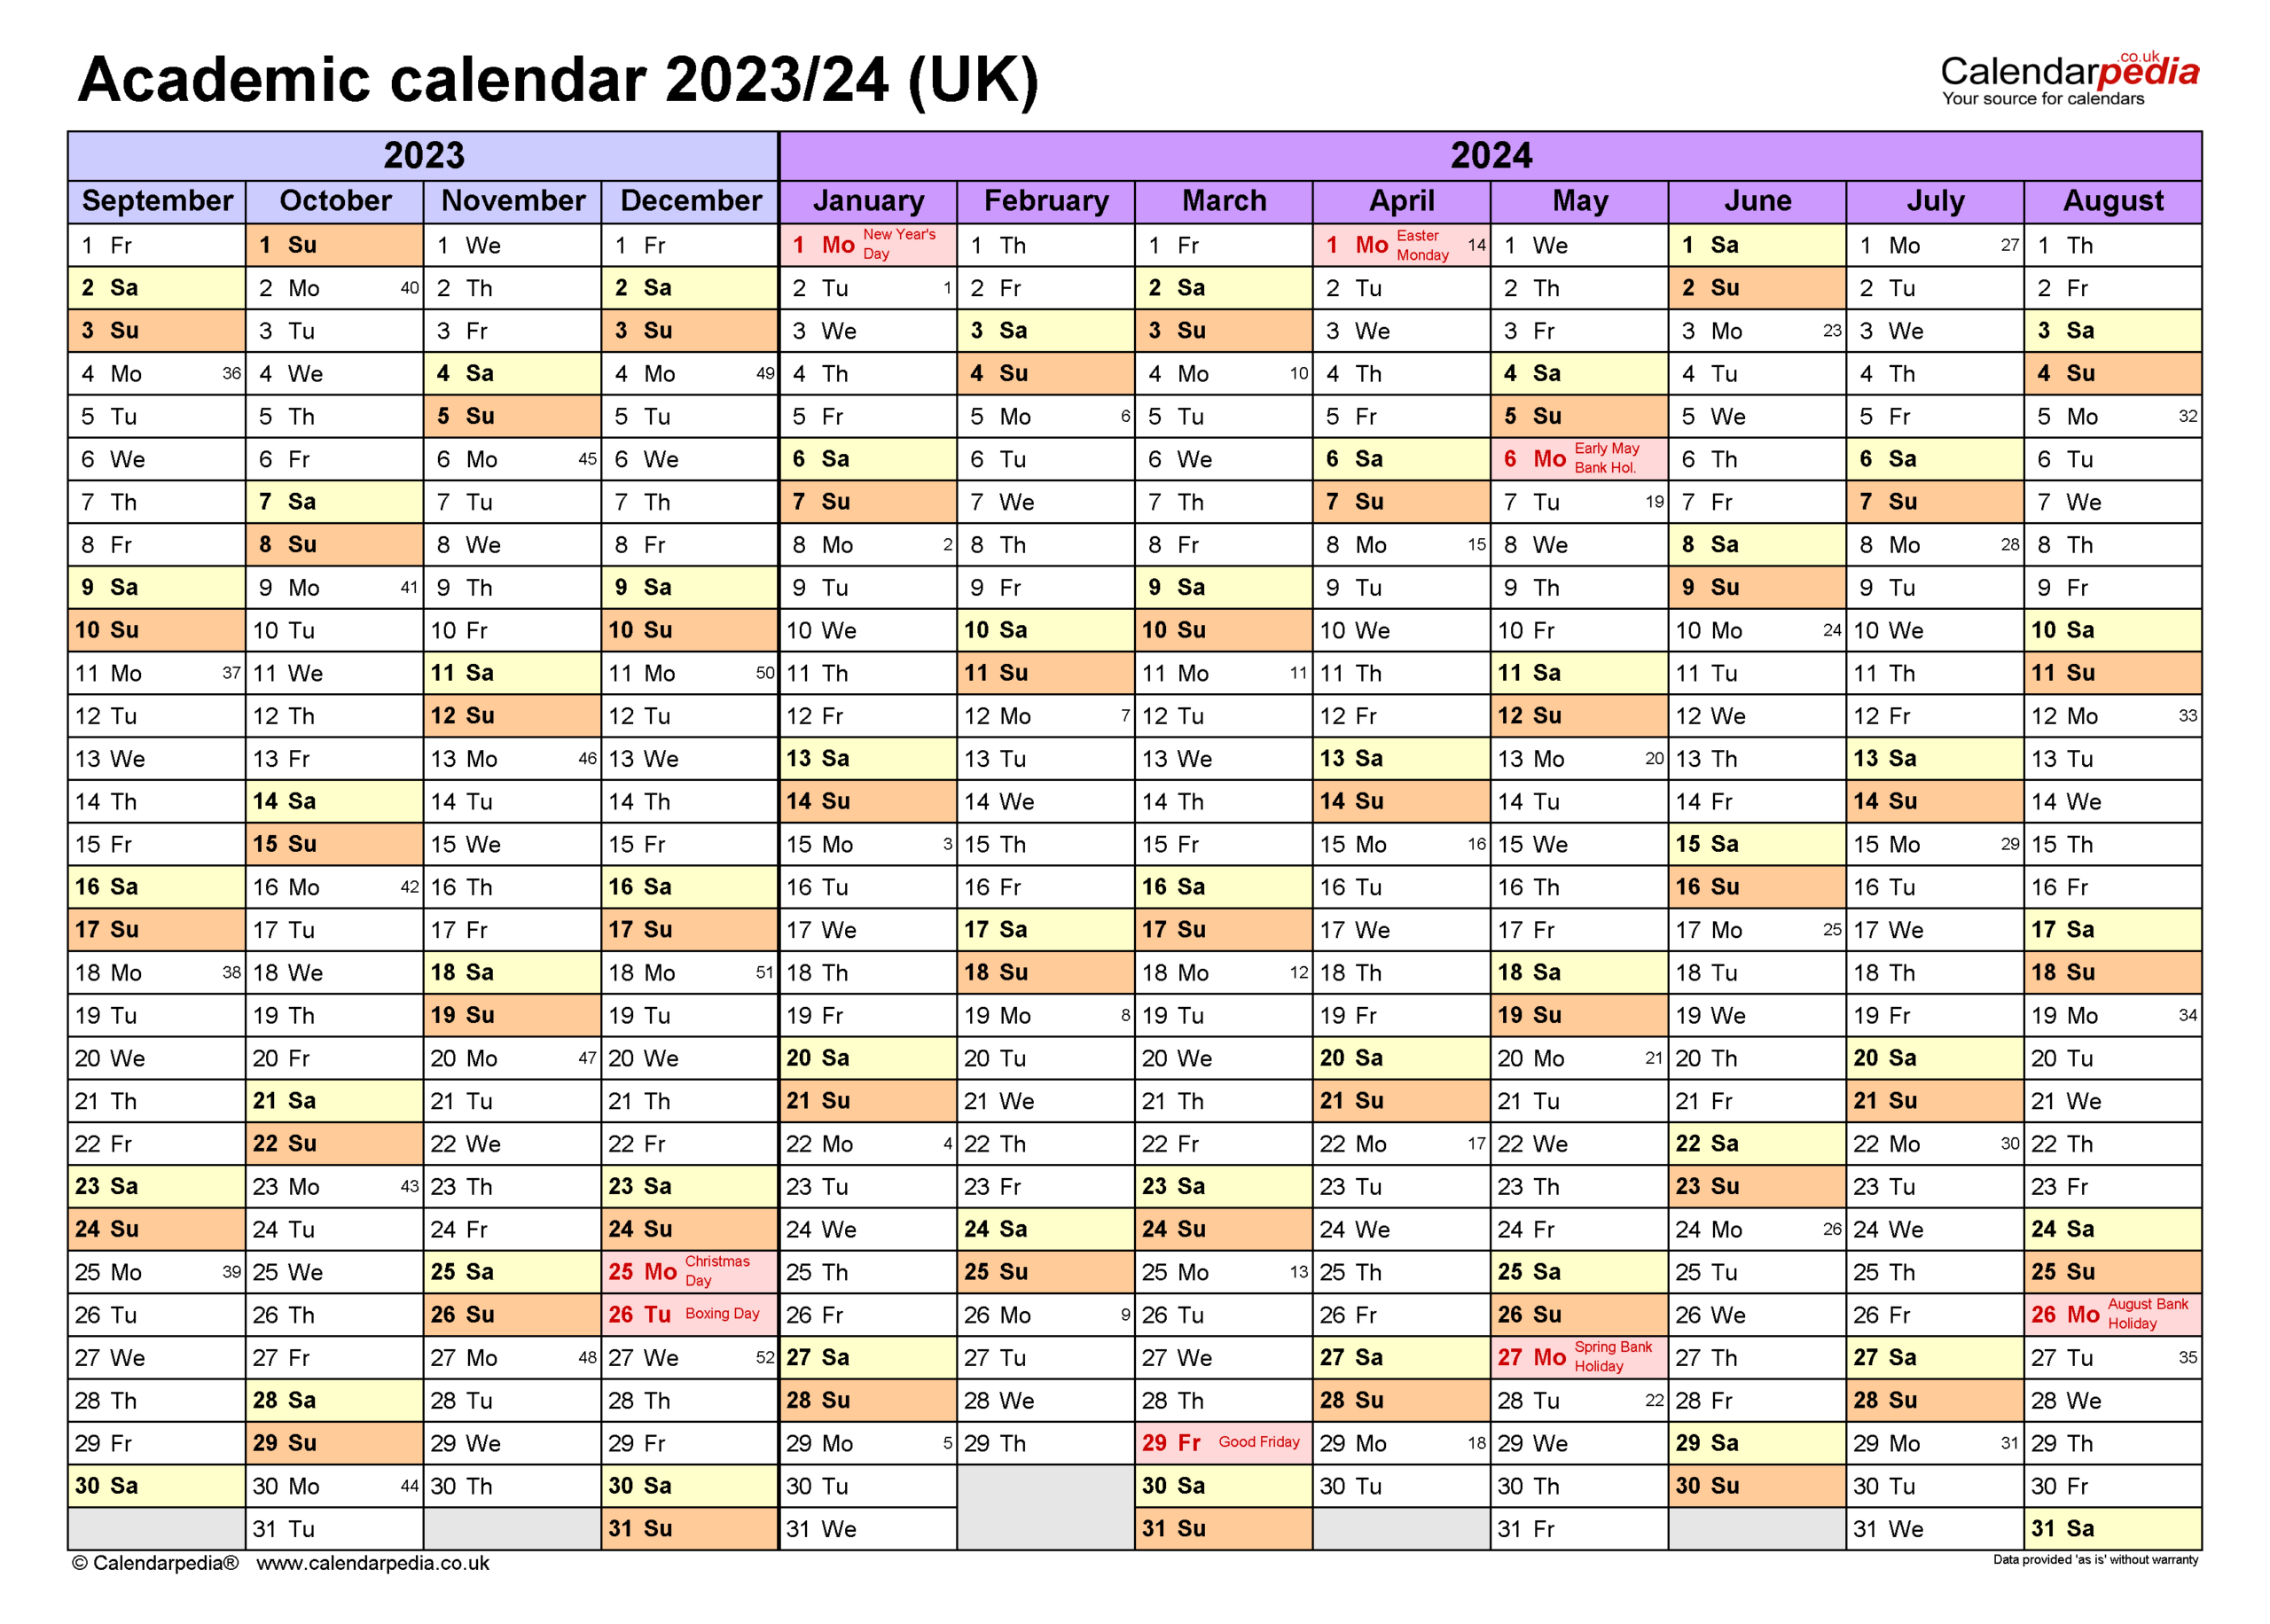 Academic Calendars 2023/24 Uk - Free Printable Word Templates | Free Printable Academic Calendar 2023 2024